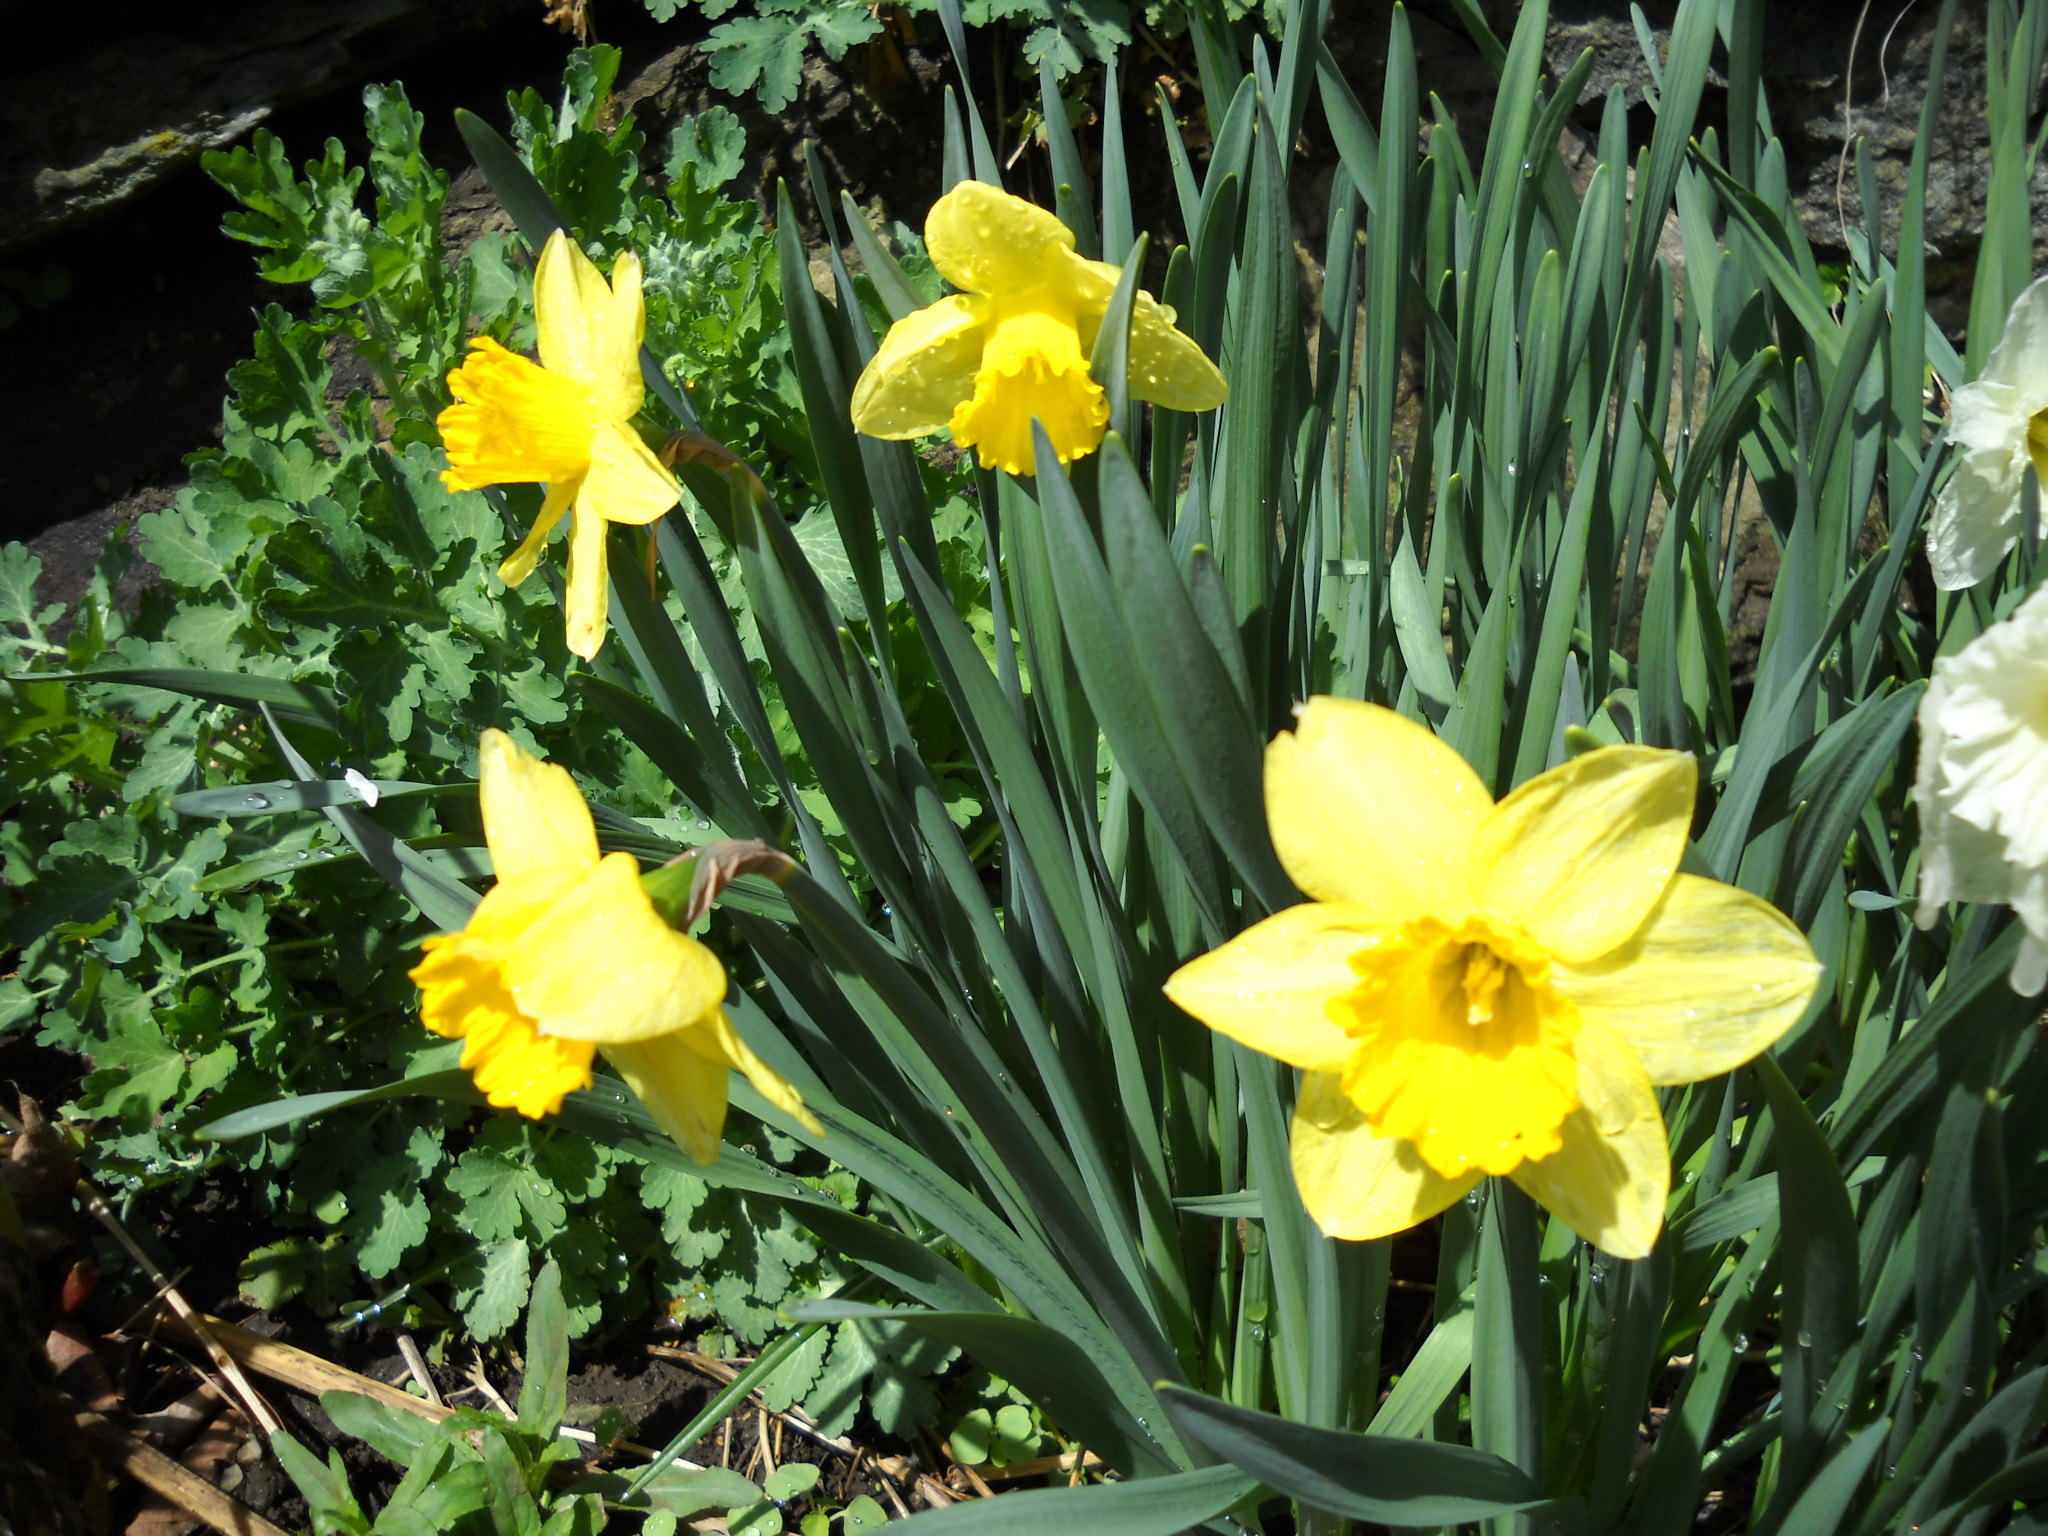 daffodils : Henry Homeyer